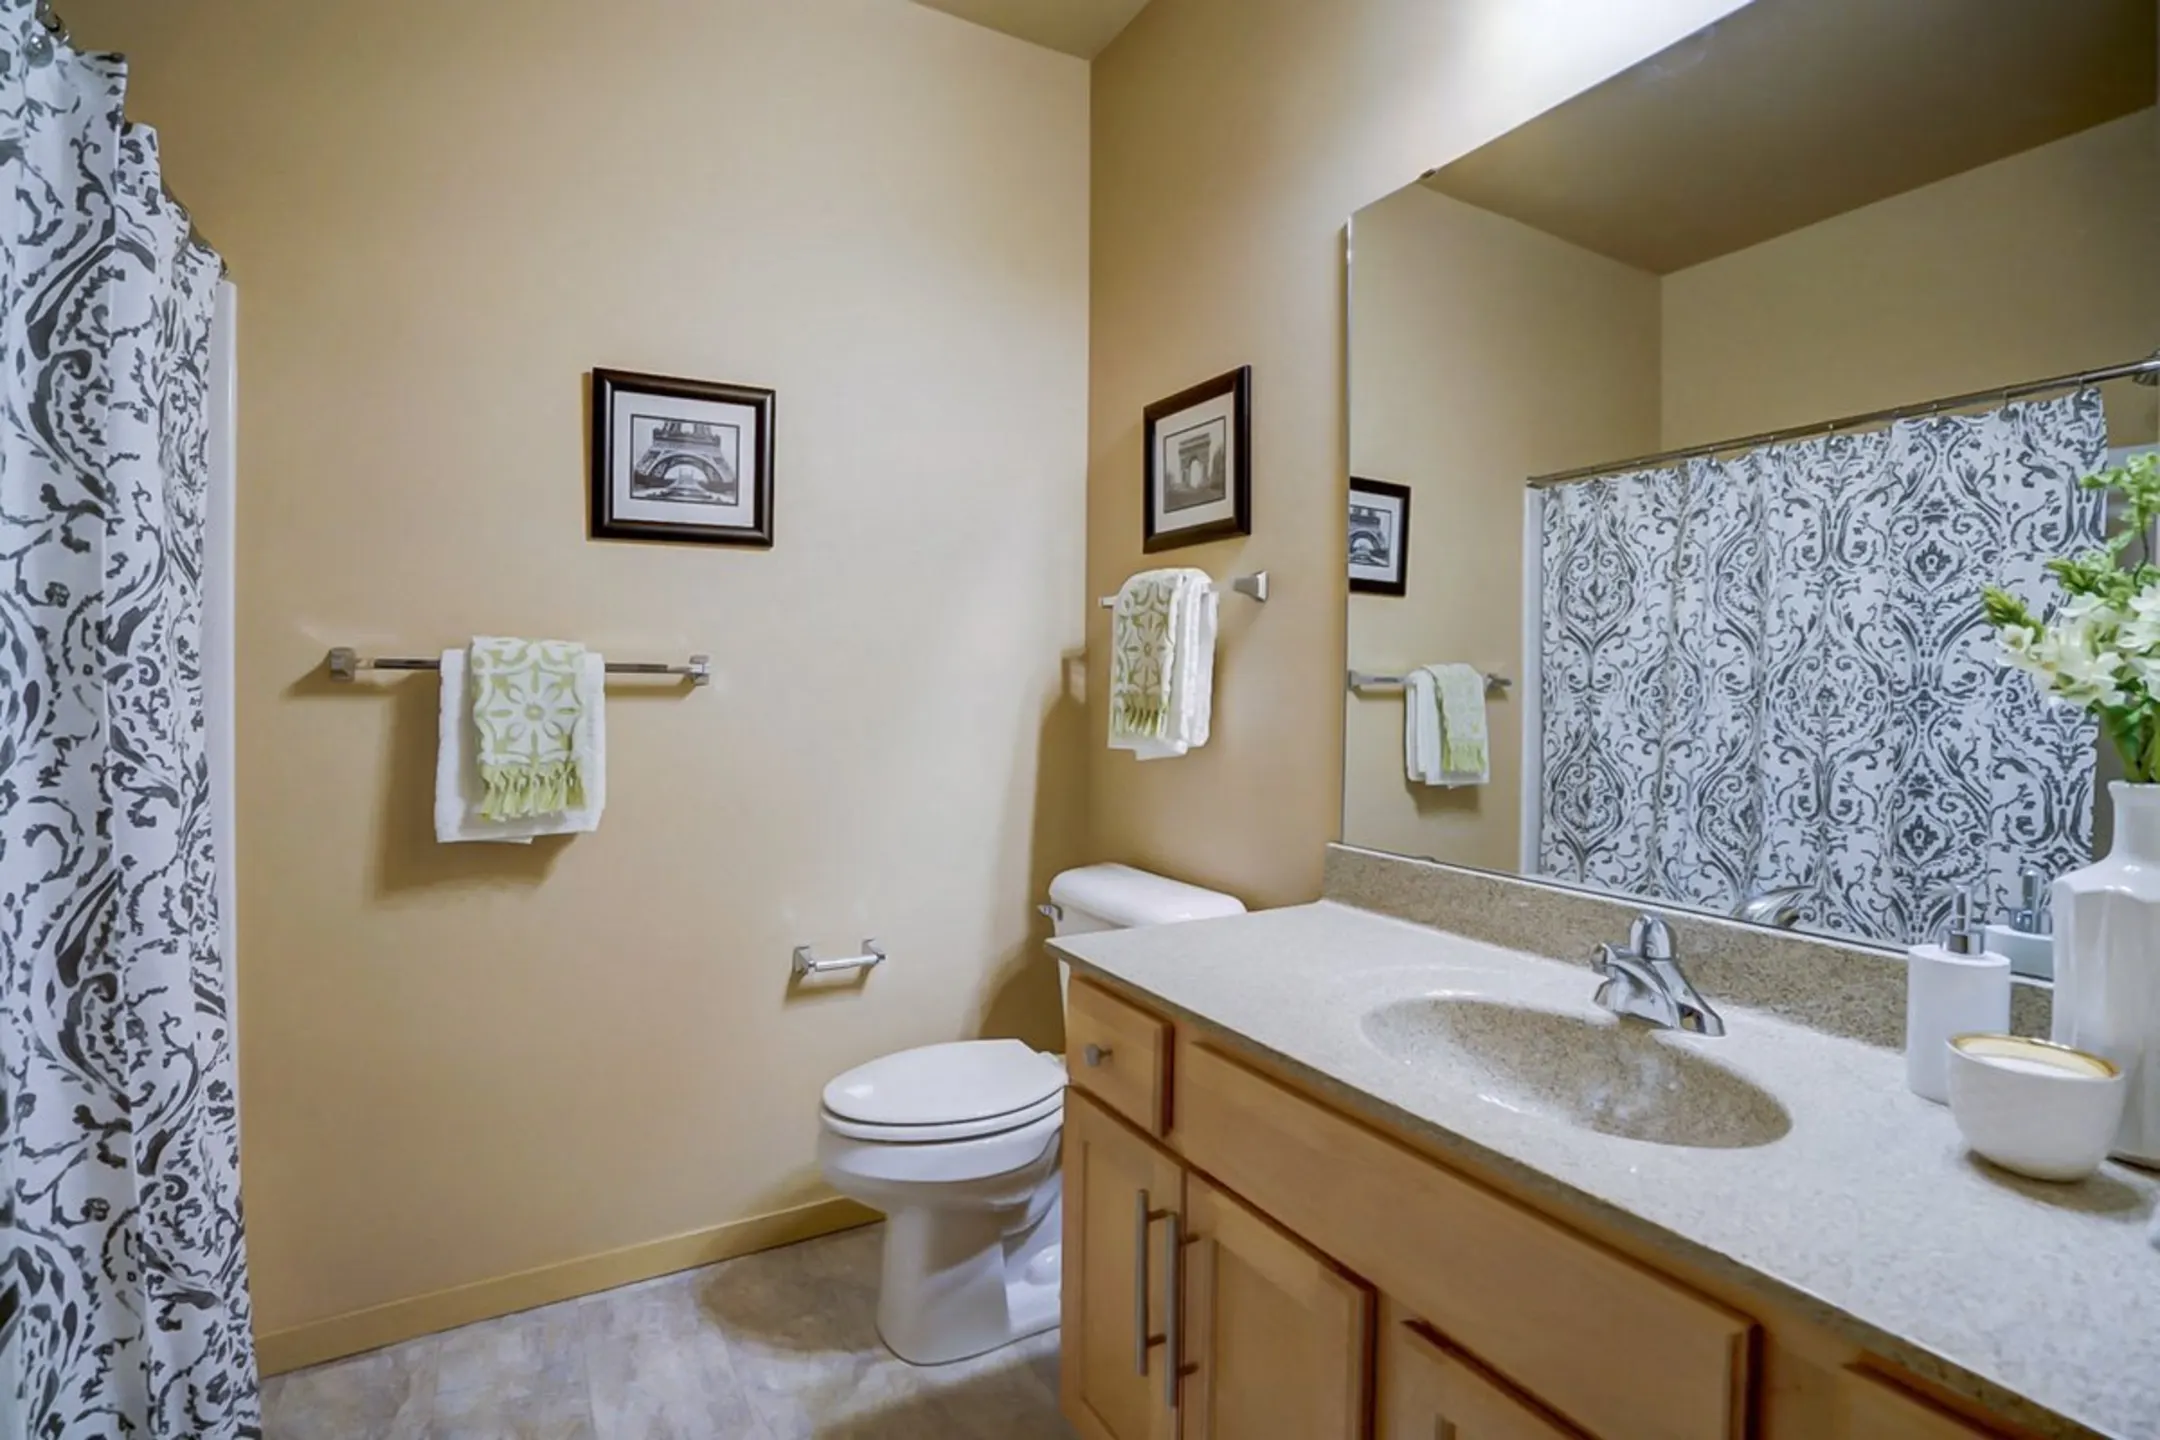 Bathroom - Hercules Trail Apartments - Madison, WI